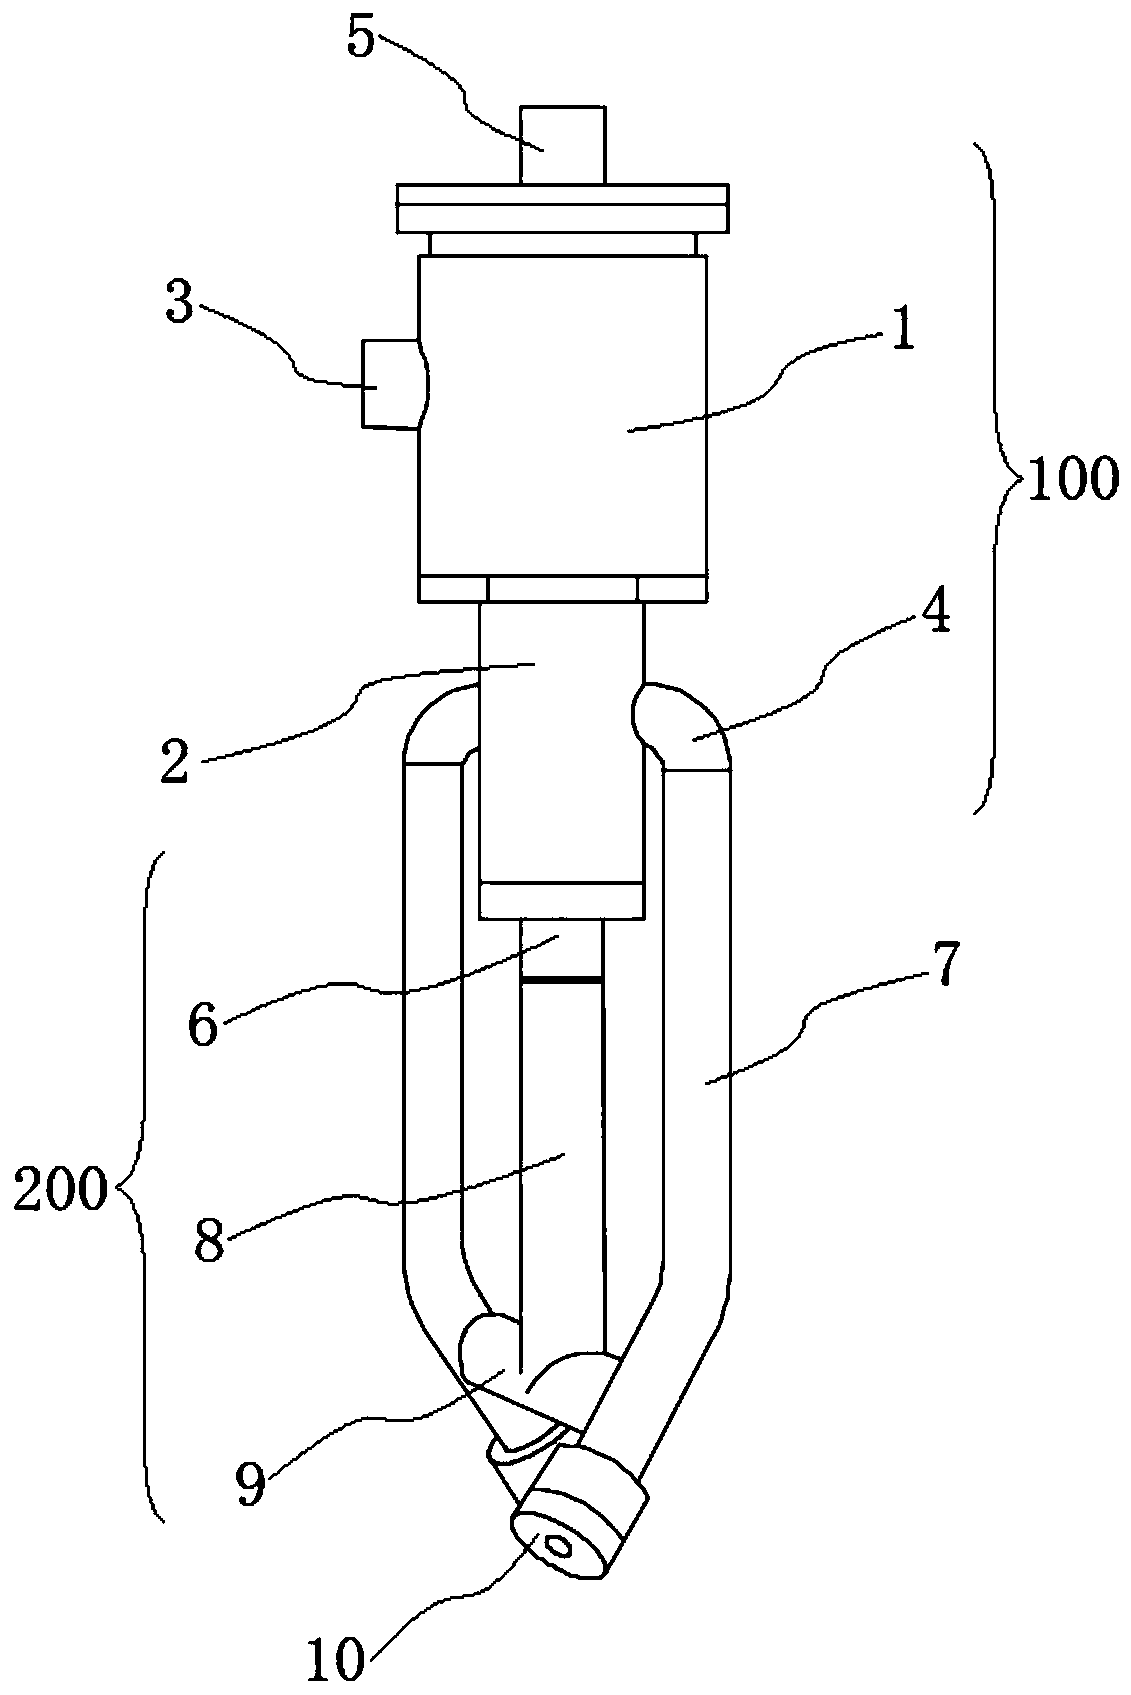 Suction-type rotary sand-blasting and powder-spraying device